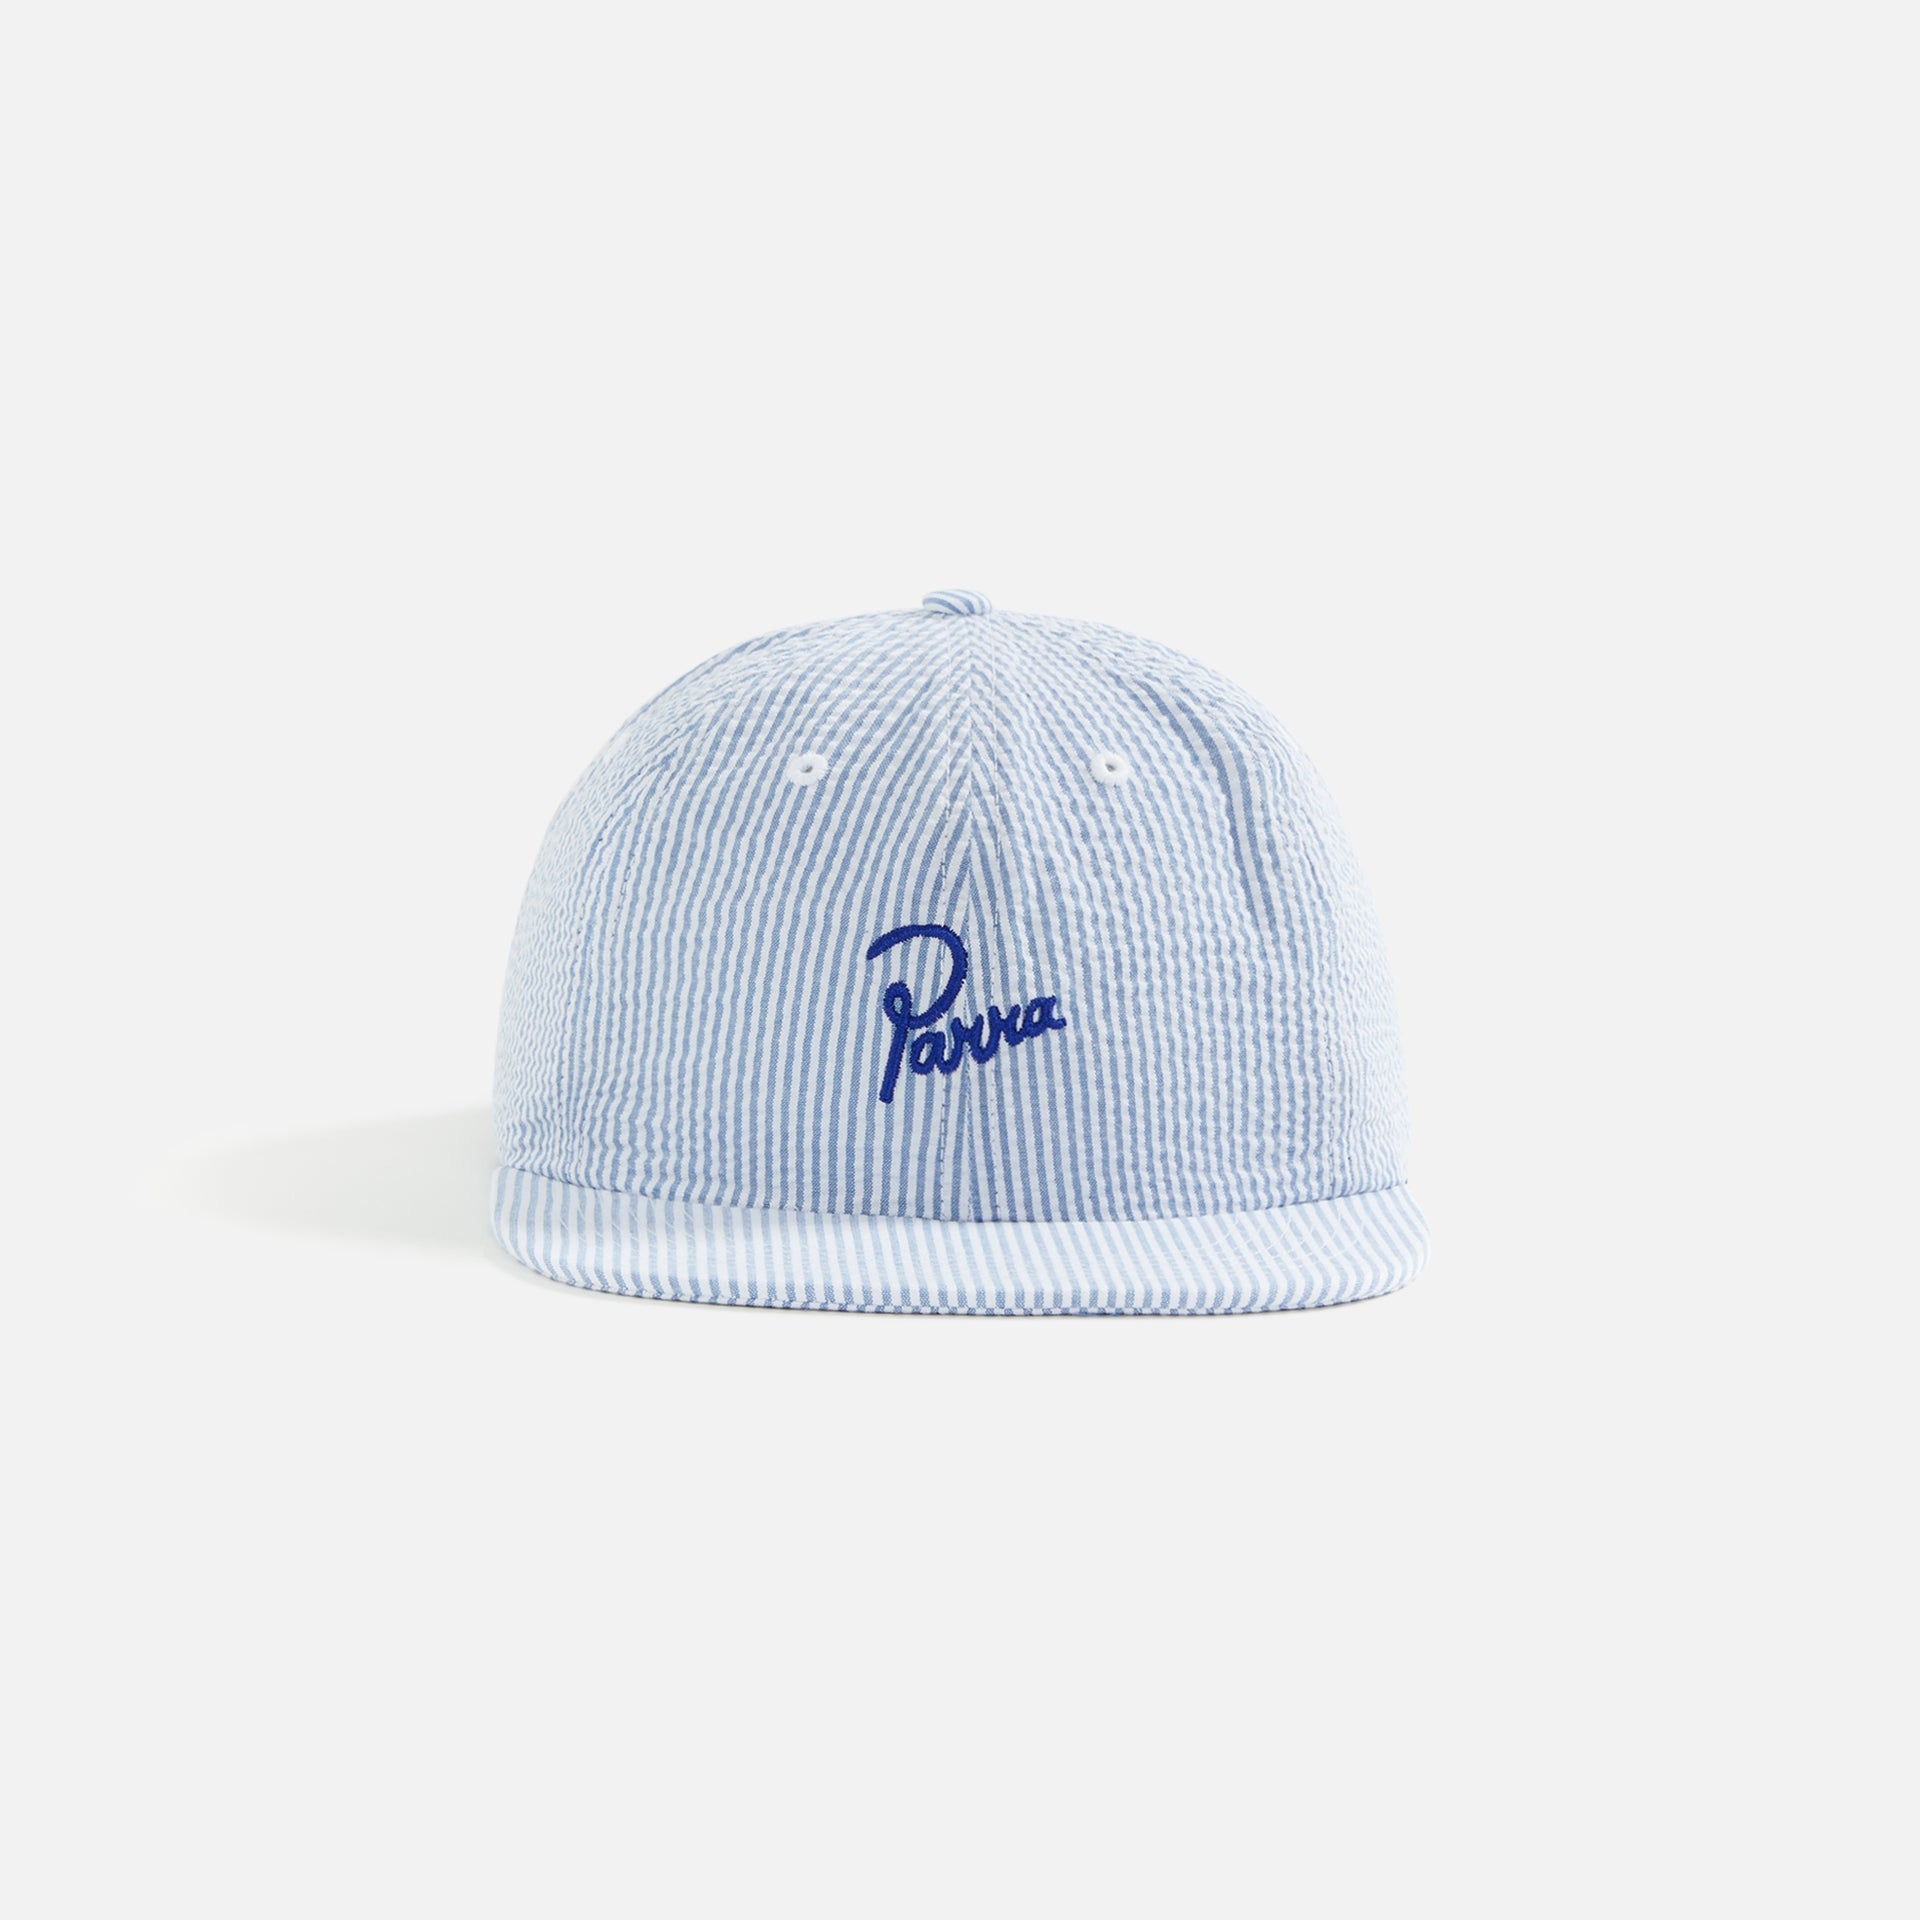 by Parra Classic Logo 6 Panel Hat - White / Blue